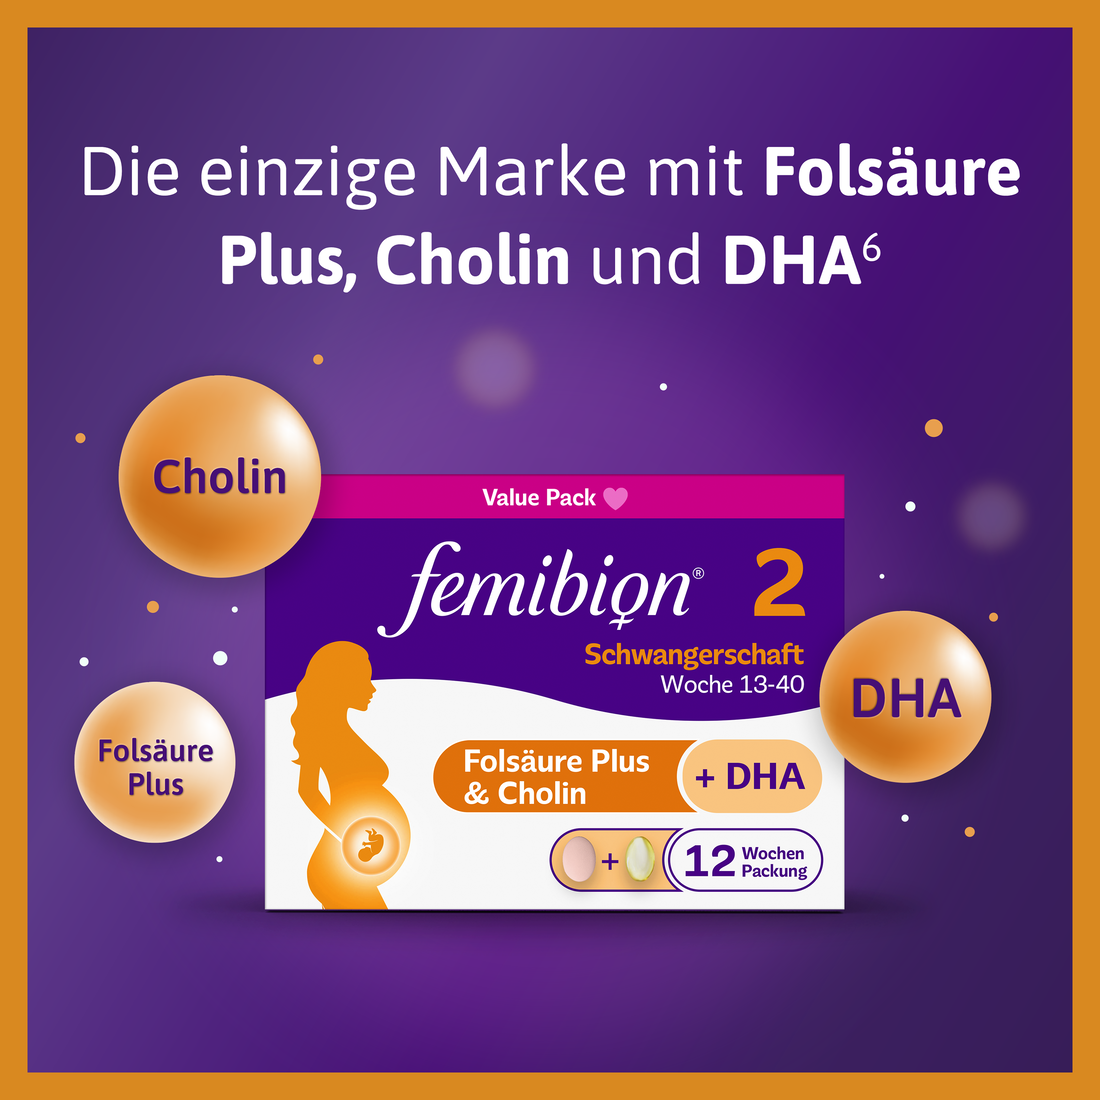 FEMIBION 2 Schwangerschaft Kombipackung 84 Tagesportionen entsprechen 84 Tabletten und 84 Kapseln